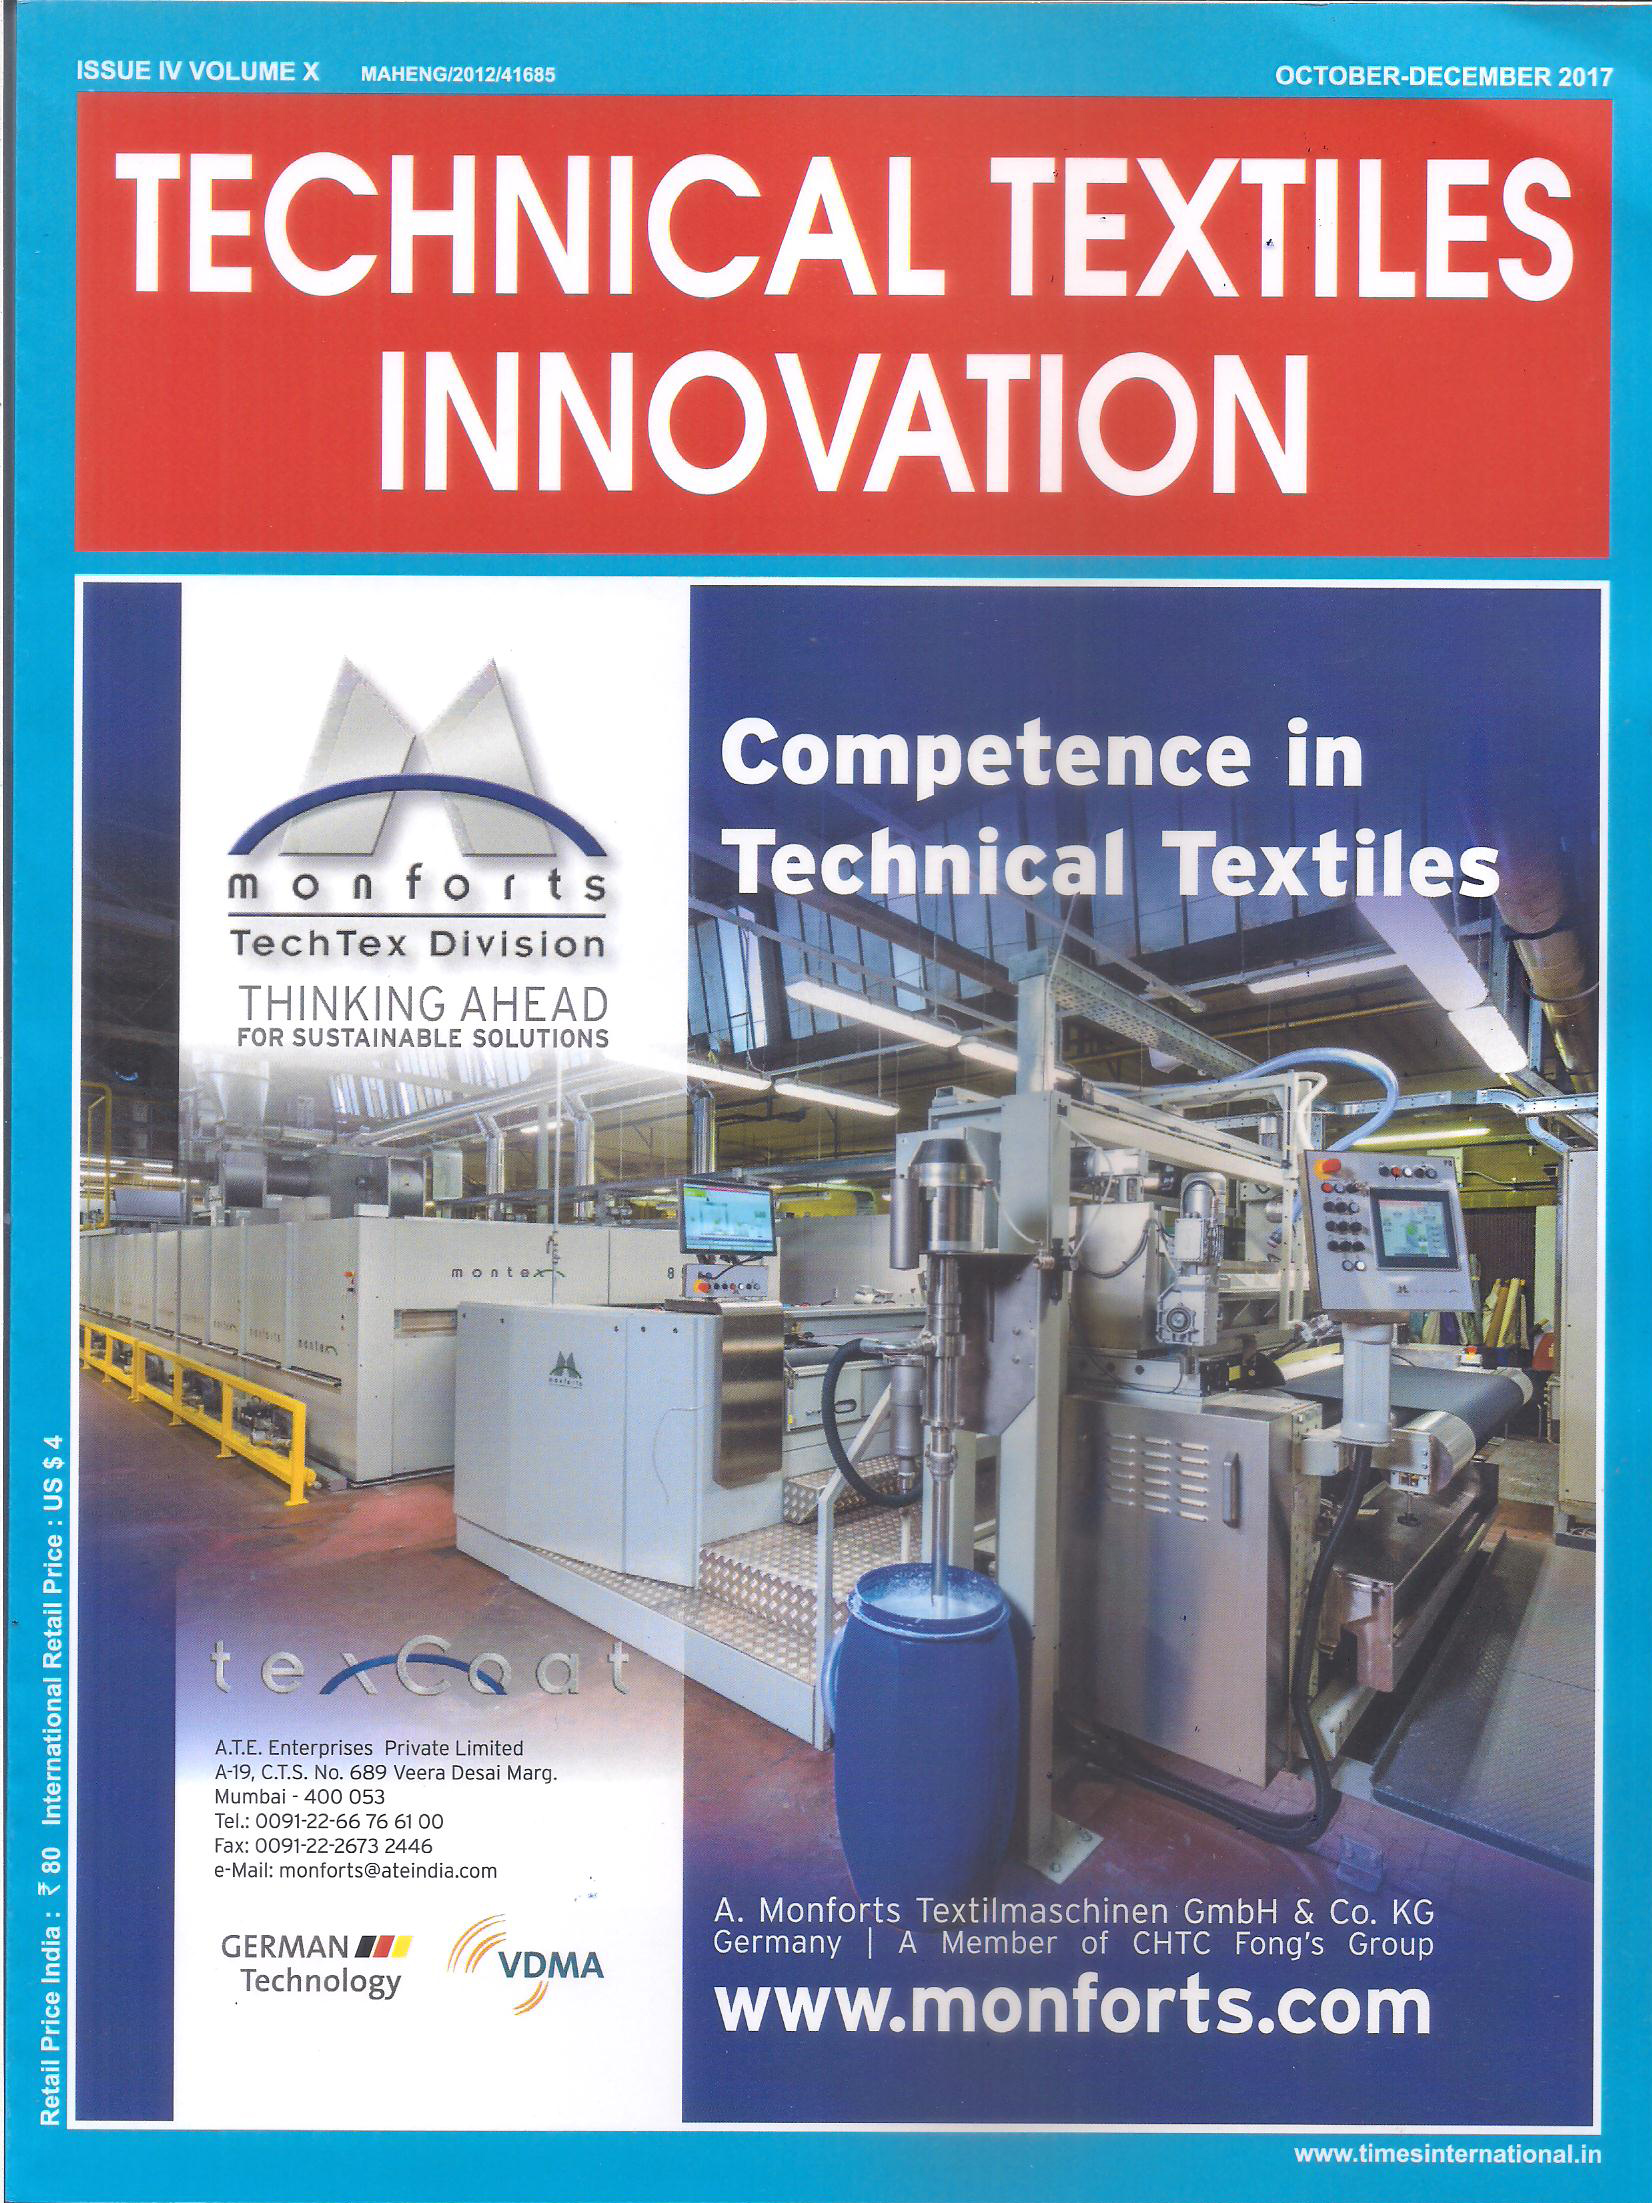 Technical Textiles Innovation